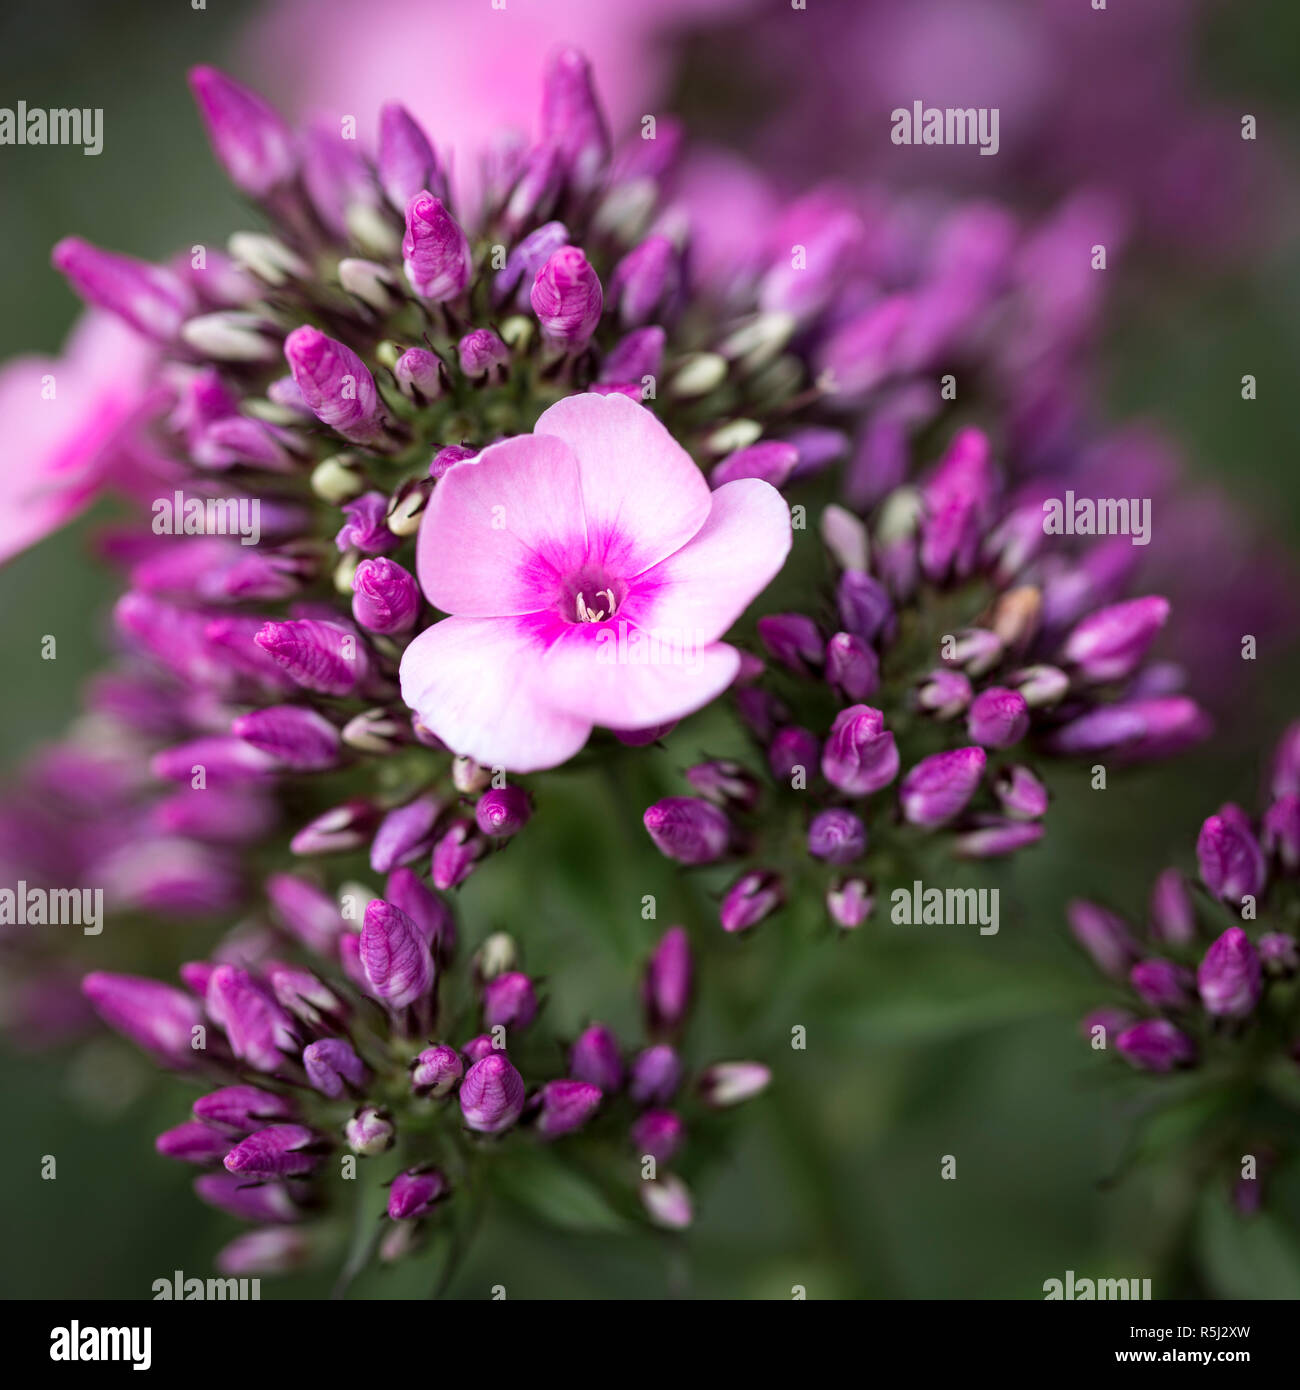 Phlox in fiore,close-up Foto Stock